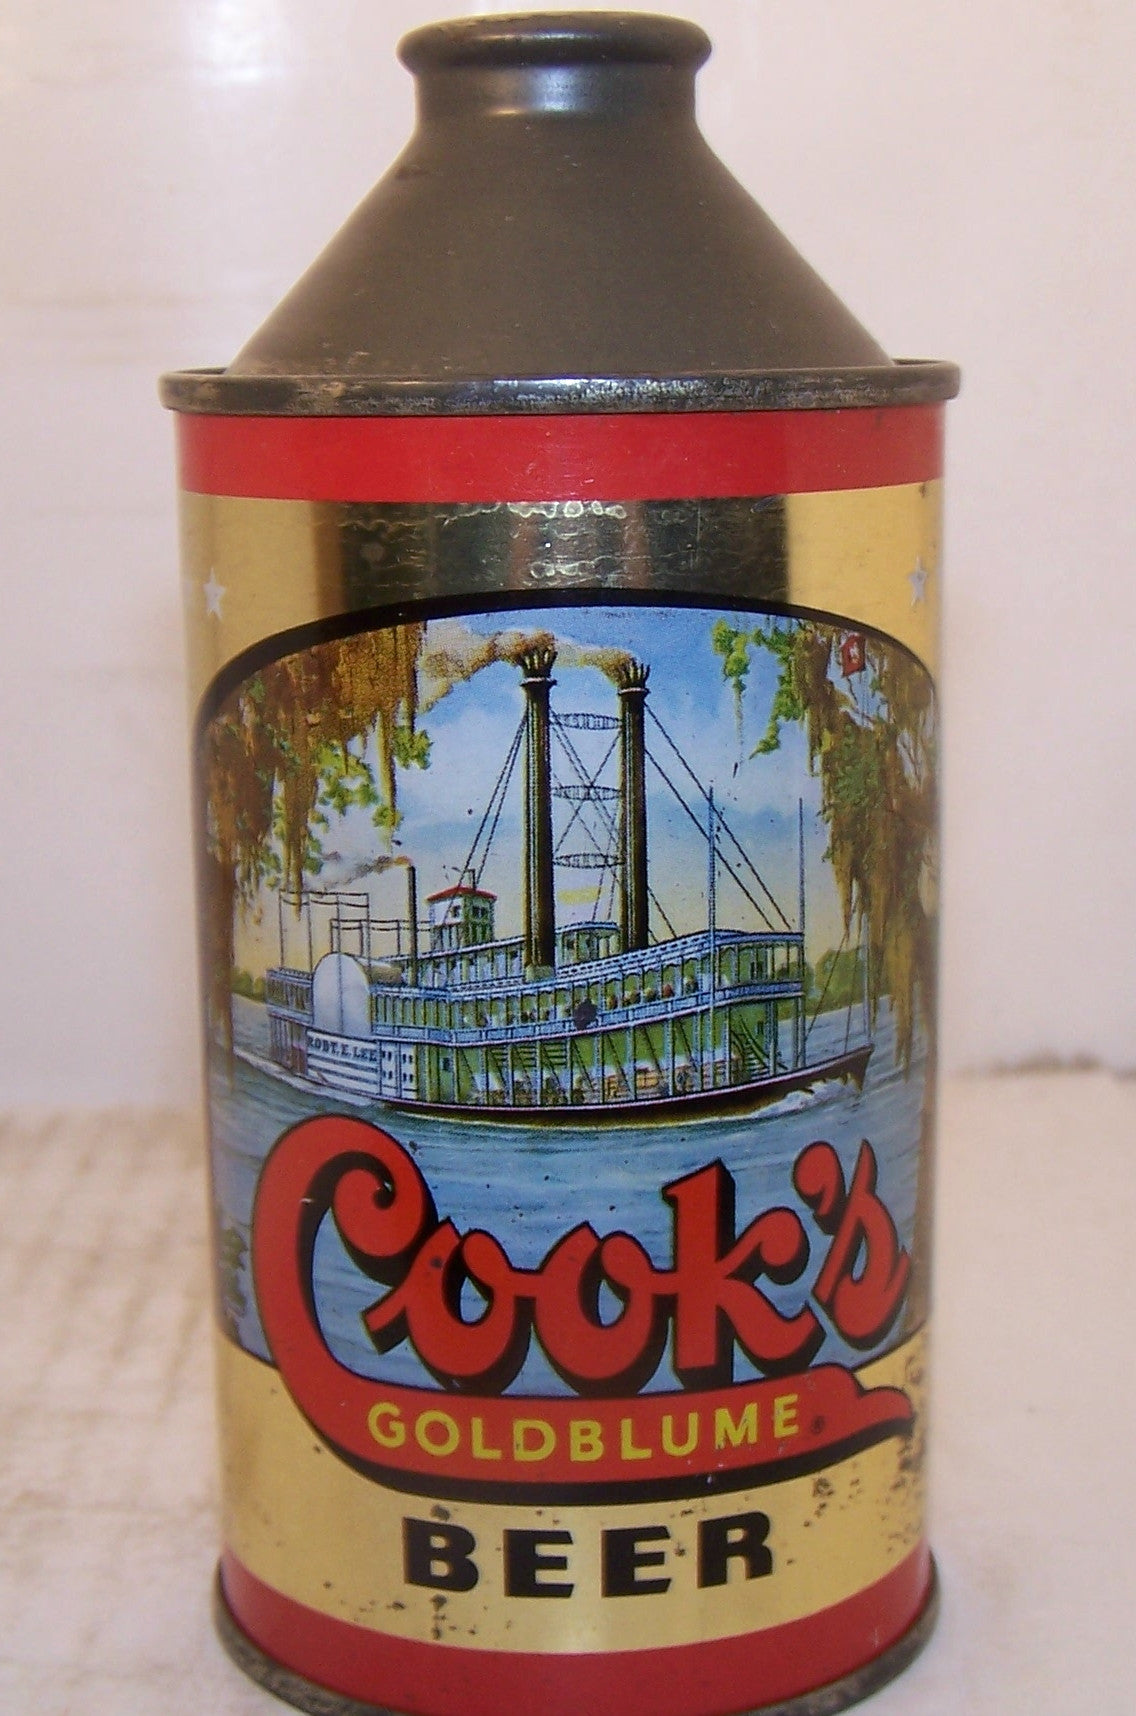 Cook's Goldblume Beer (Robert E. Lee) USBC 158-7 Grade 1/1- Sold 11/21/14